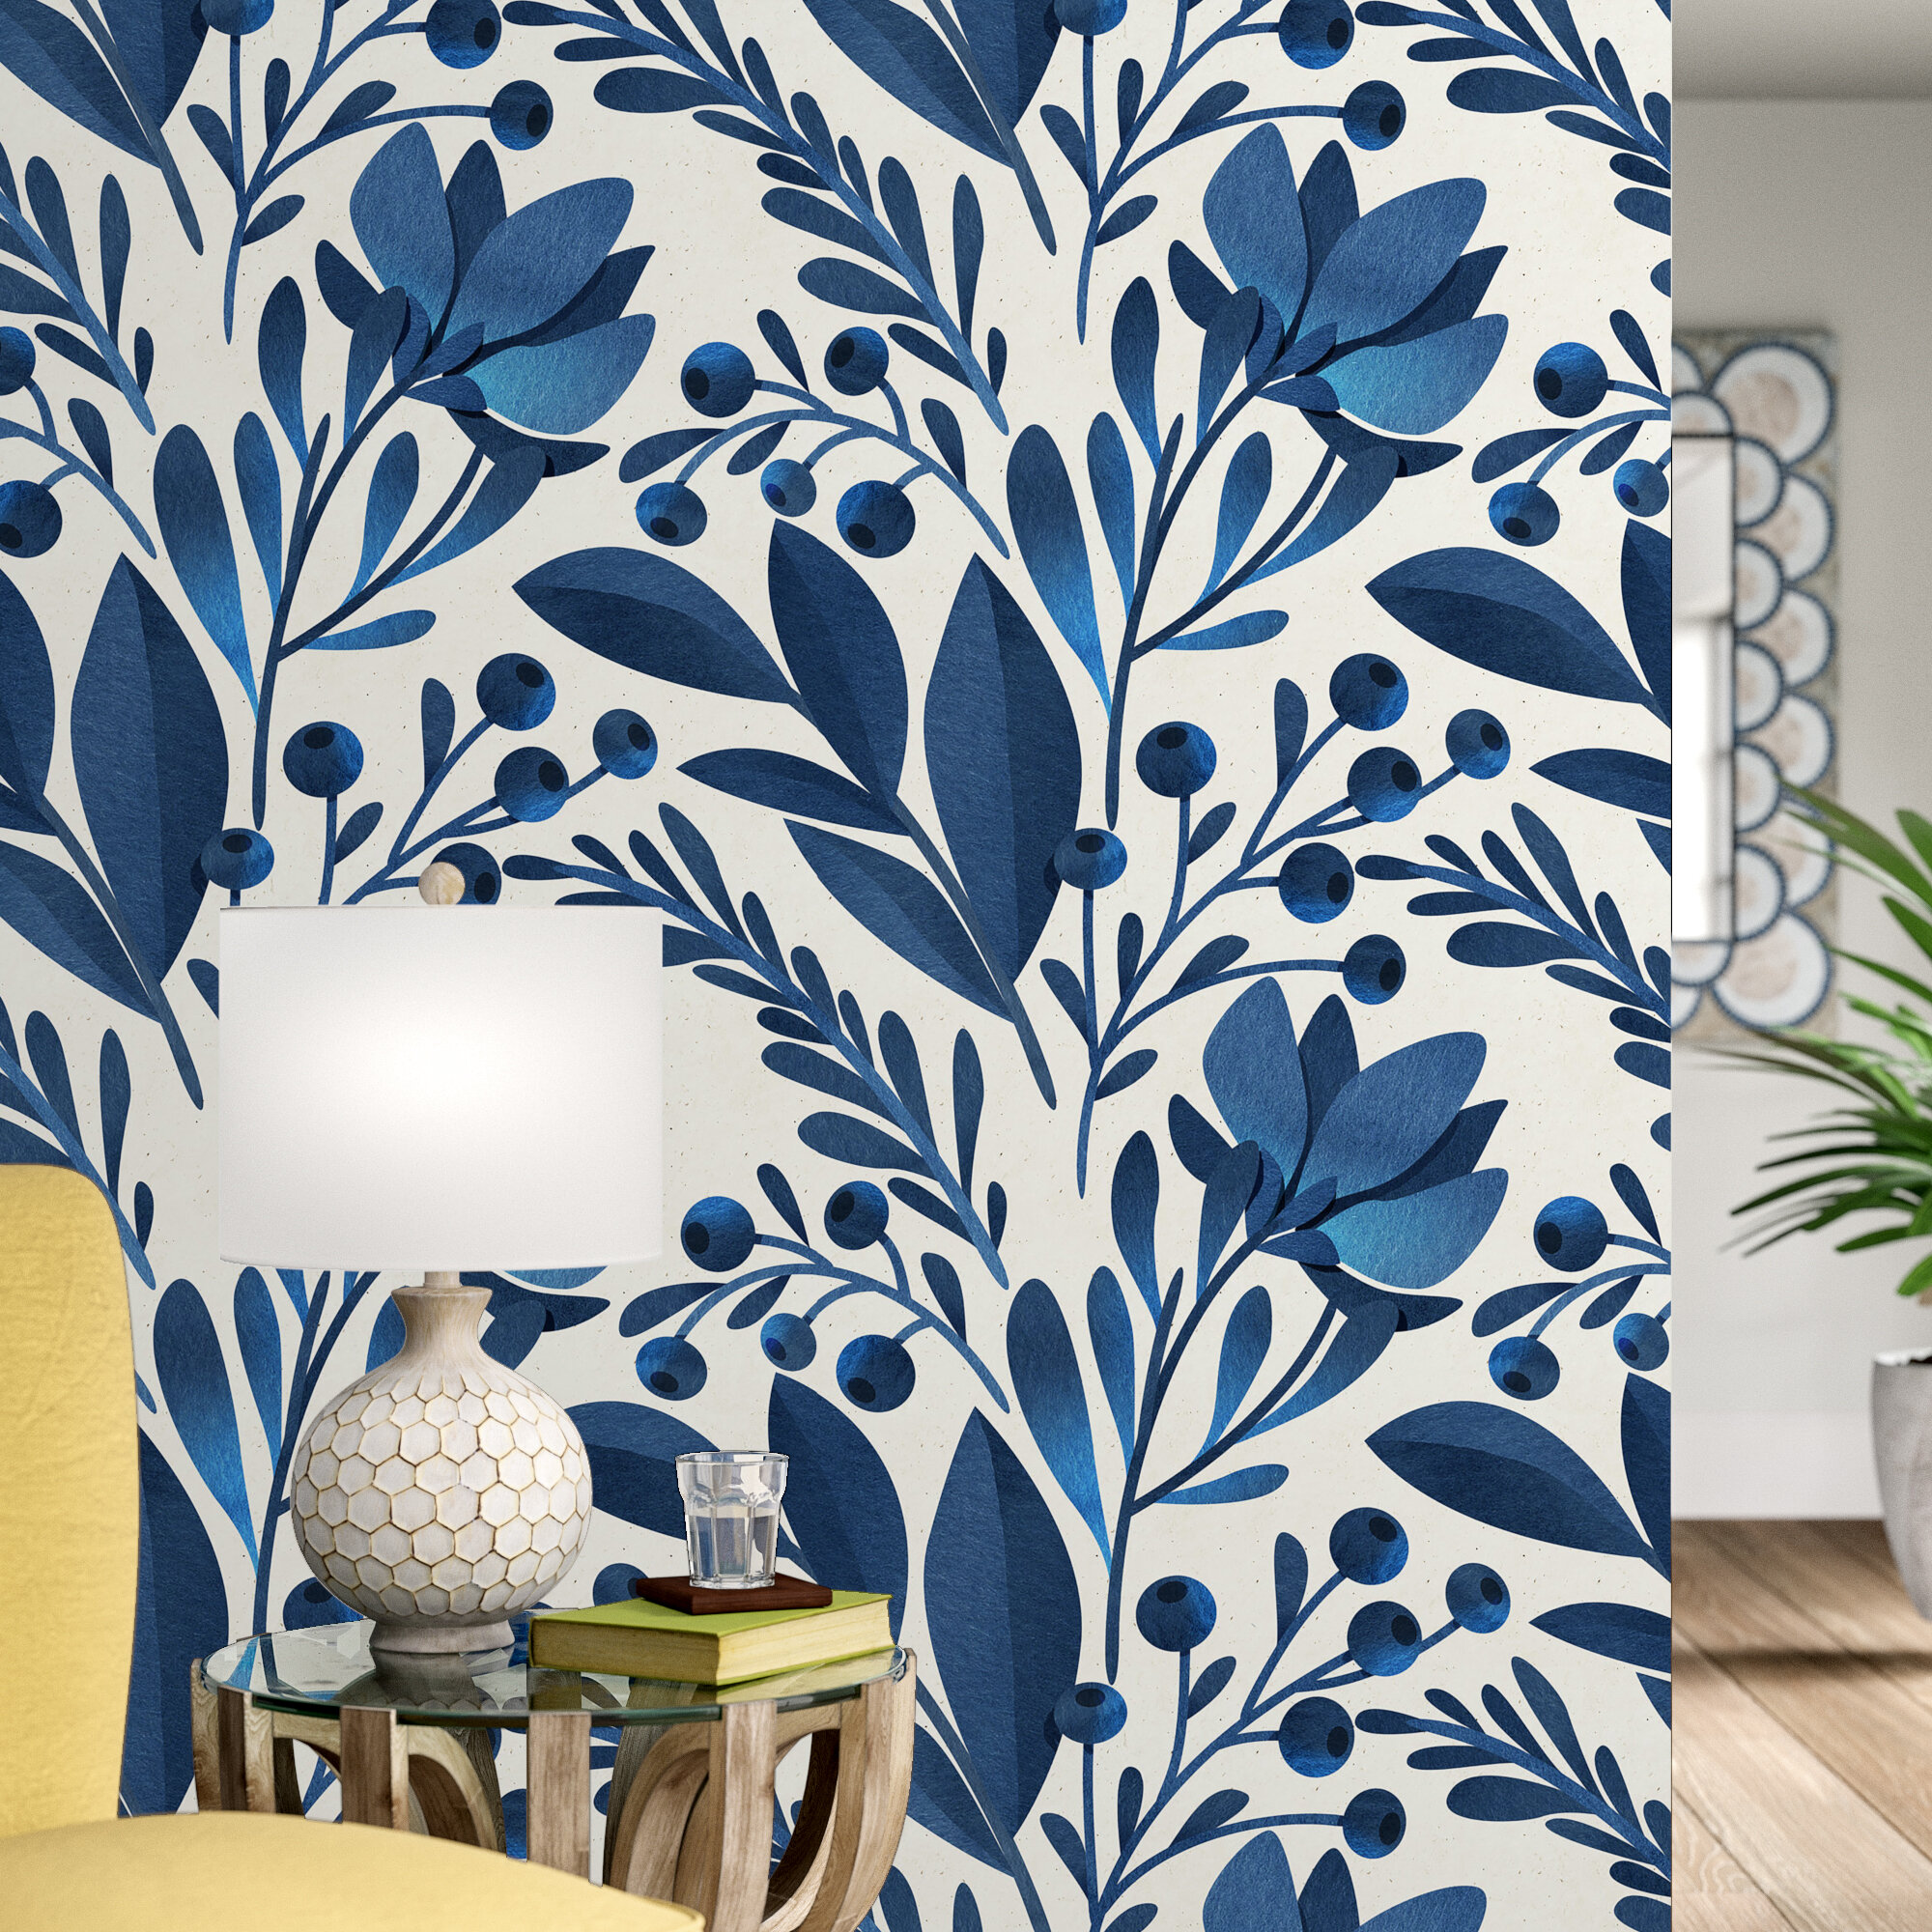  3D Blue Flowers 1387 Wall Paper Print Decal Deco Wall Mural  Self-Adhesive Wallpaper AJ US Lv (Woven Paper (Need Glue), 【 82”x58”】  208x146cm(WxH)) : Tools & Home Improvement